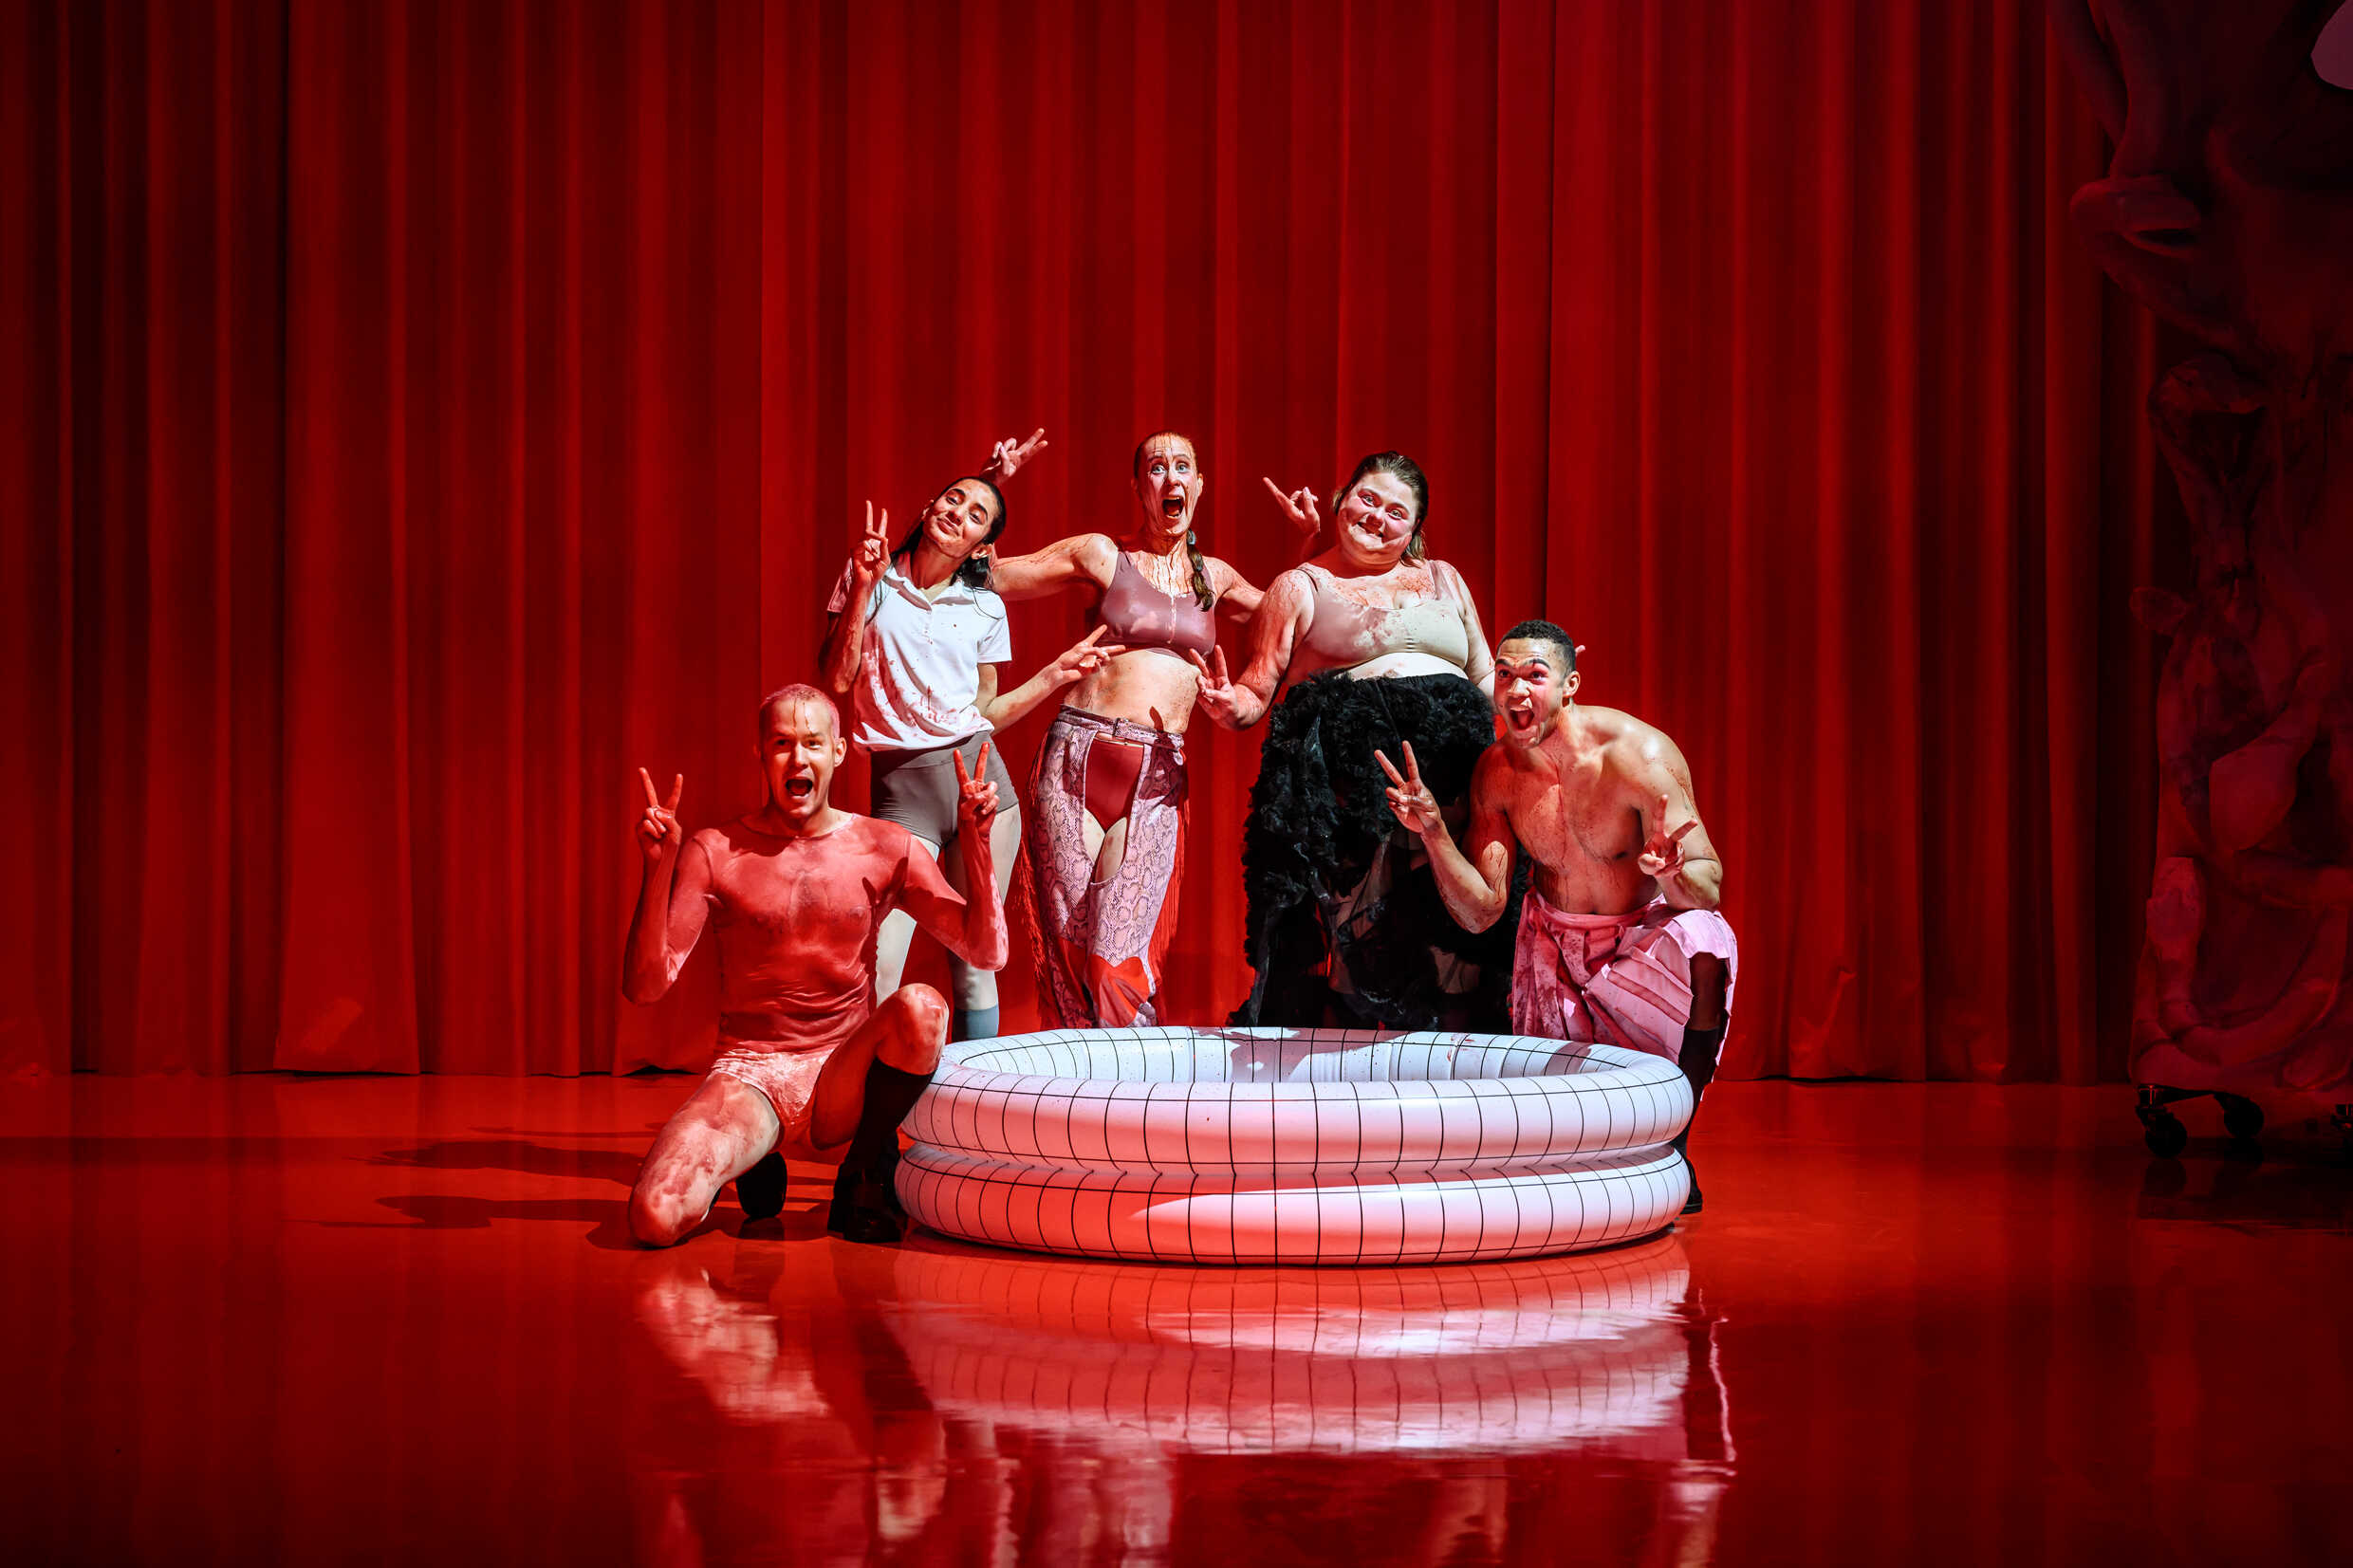 Ensemblen i Like Lovers Do (Medusas memoarer). Skandinavienpremiär 12 april på Lilla scenen, Kulturhuset Stadsteatern.